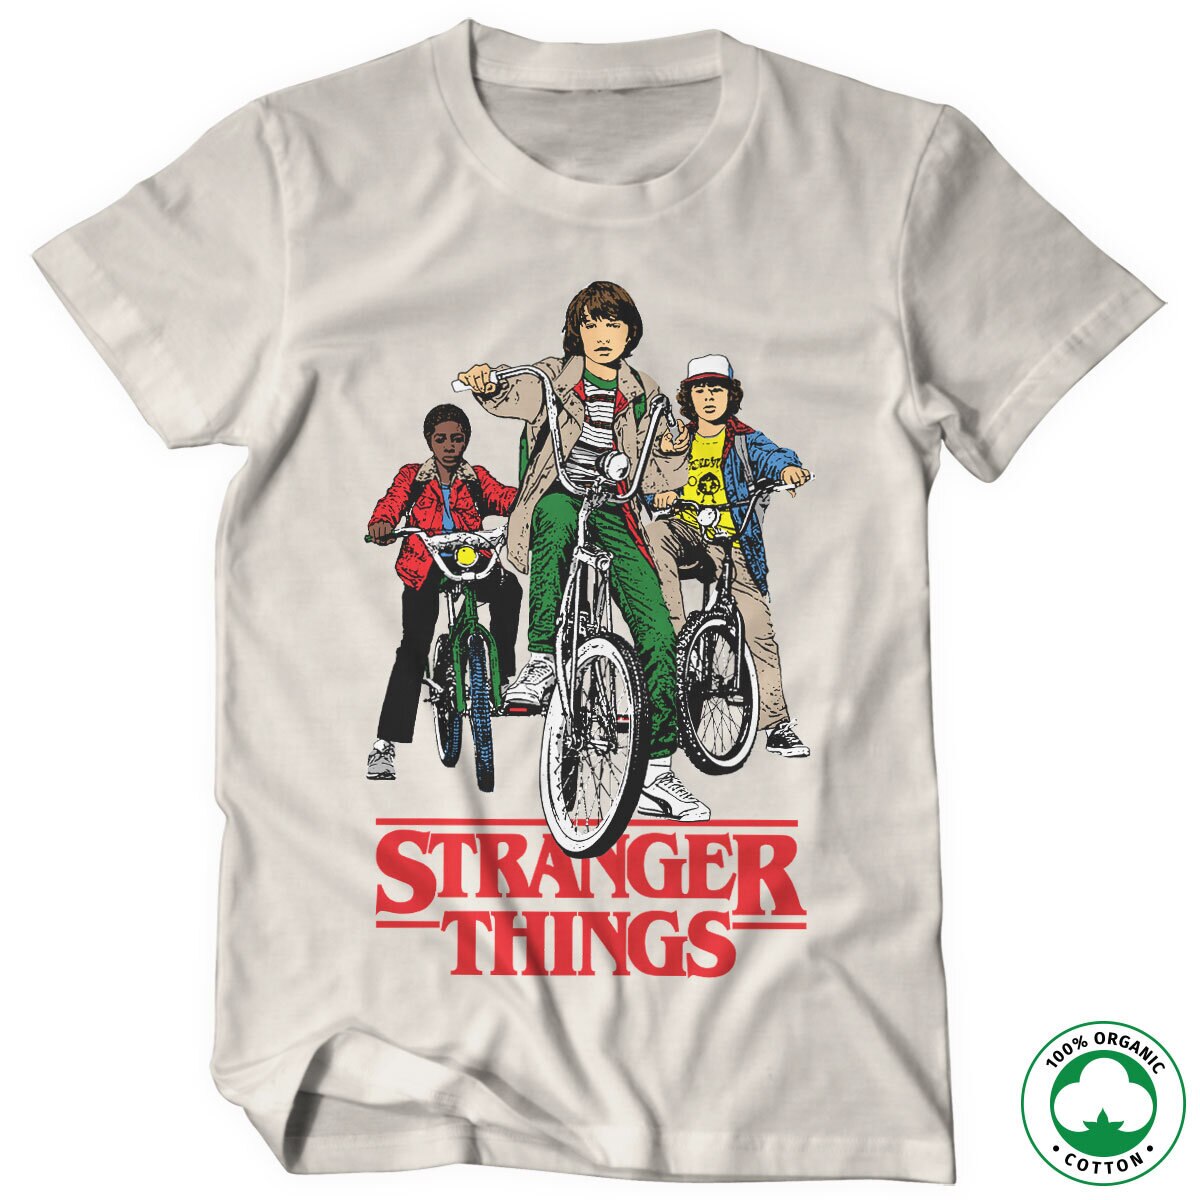 Stranger Things Bikes Organic T-Shirt